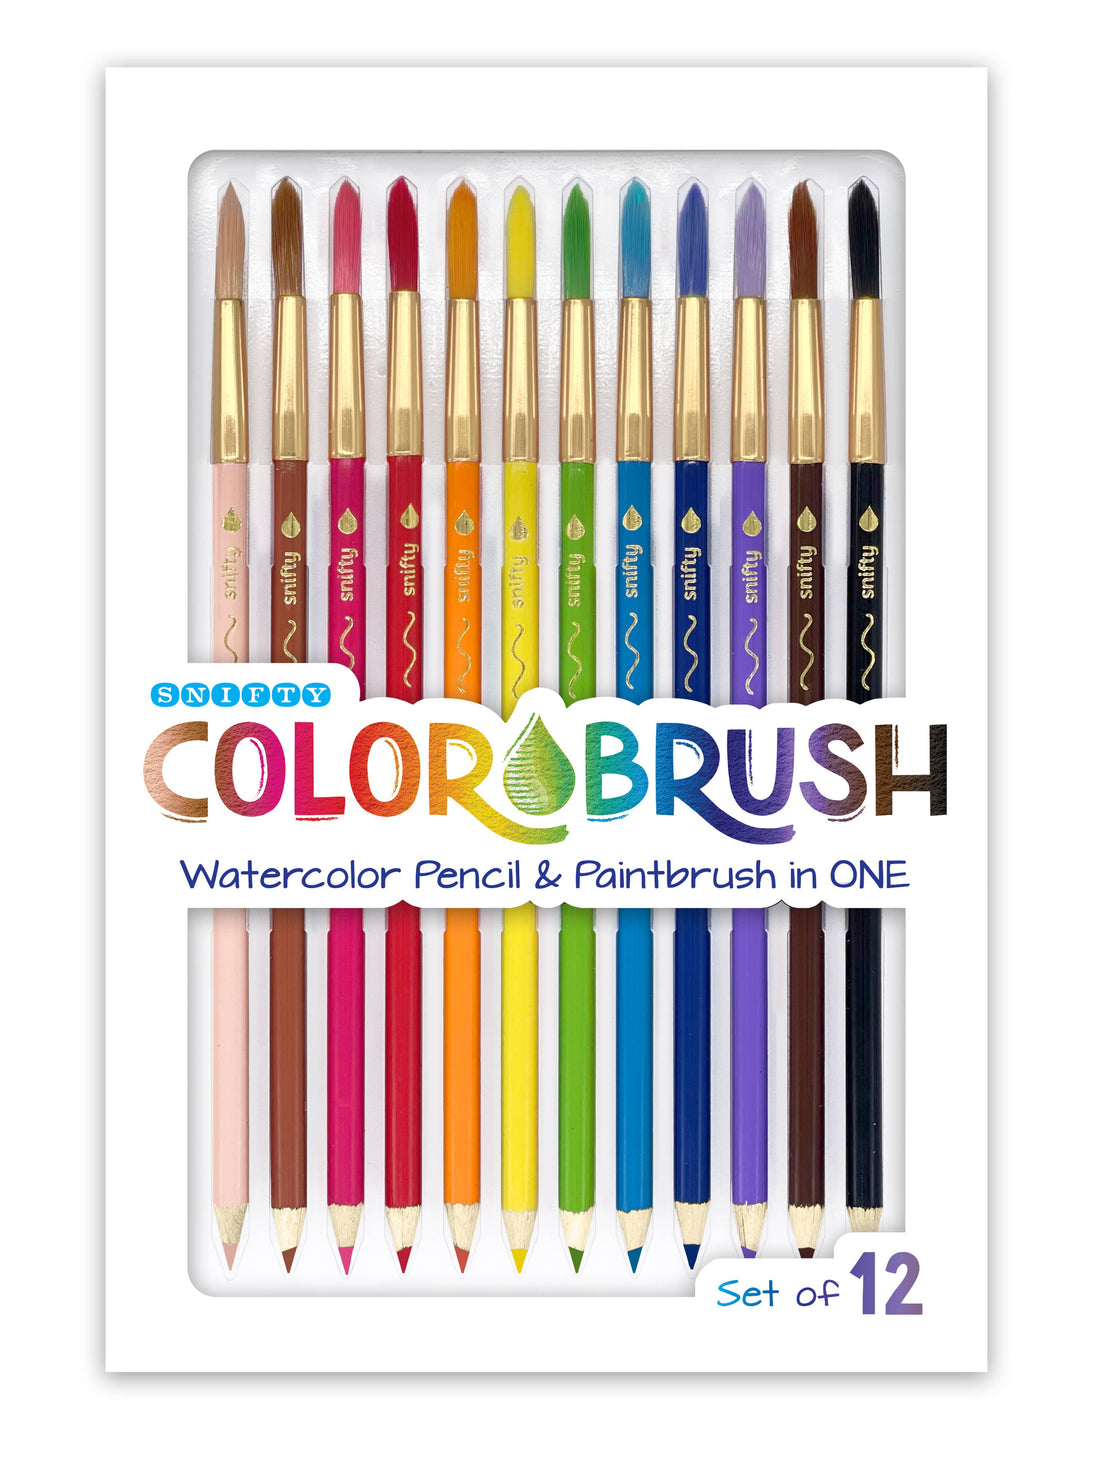 COLORBRUSH - watercolor 
pencil/paintbrush 
- SET OF 12